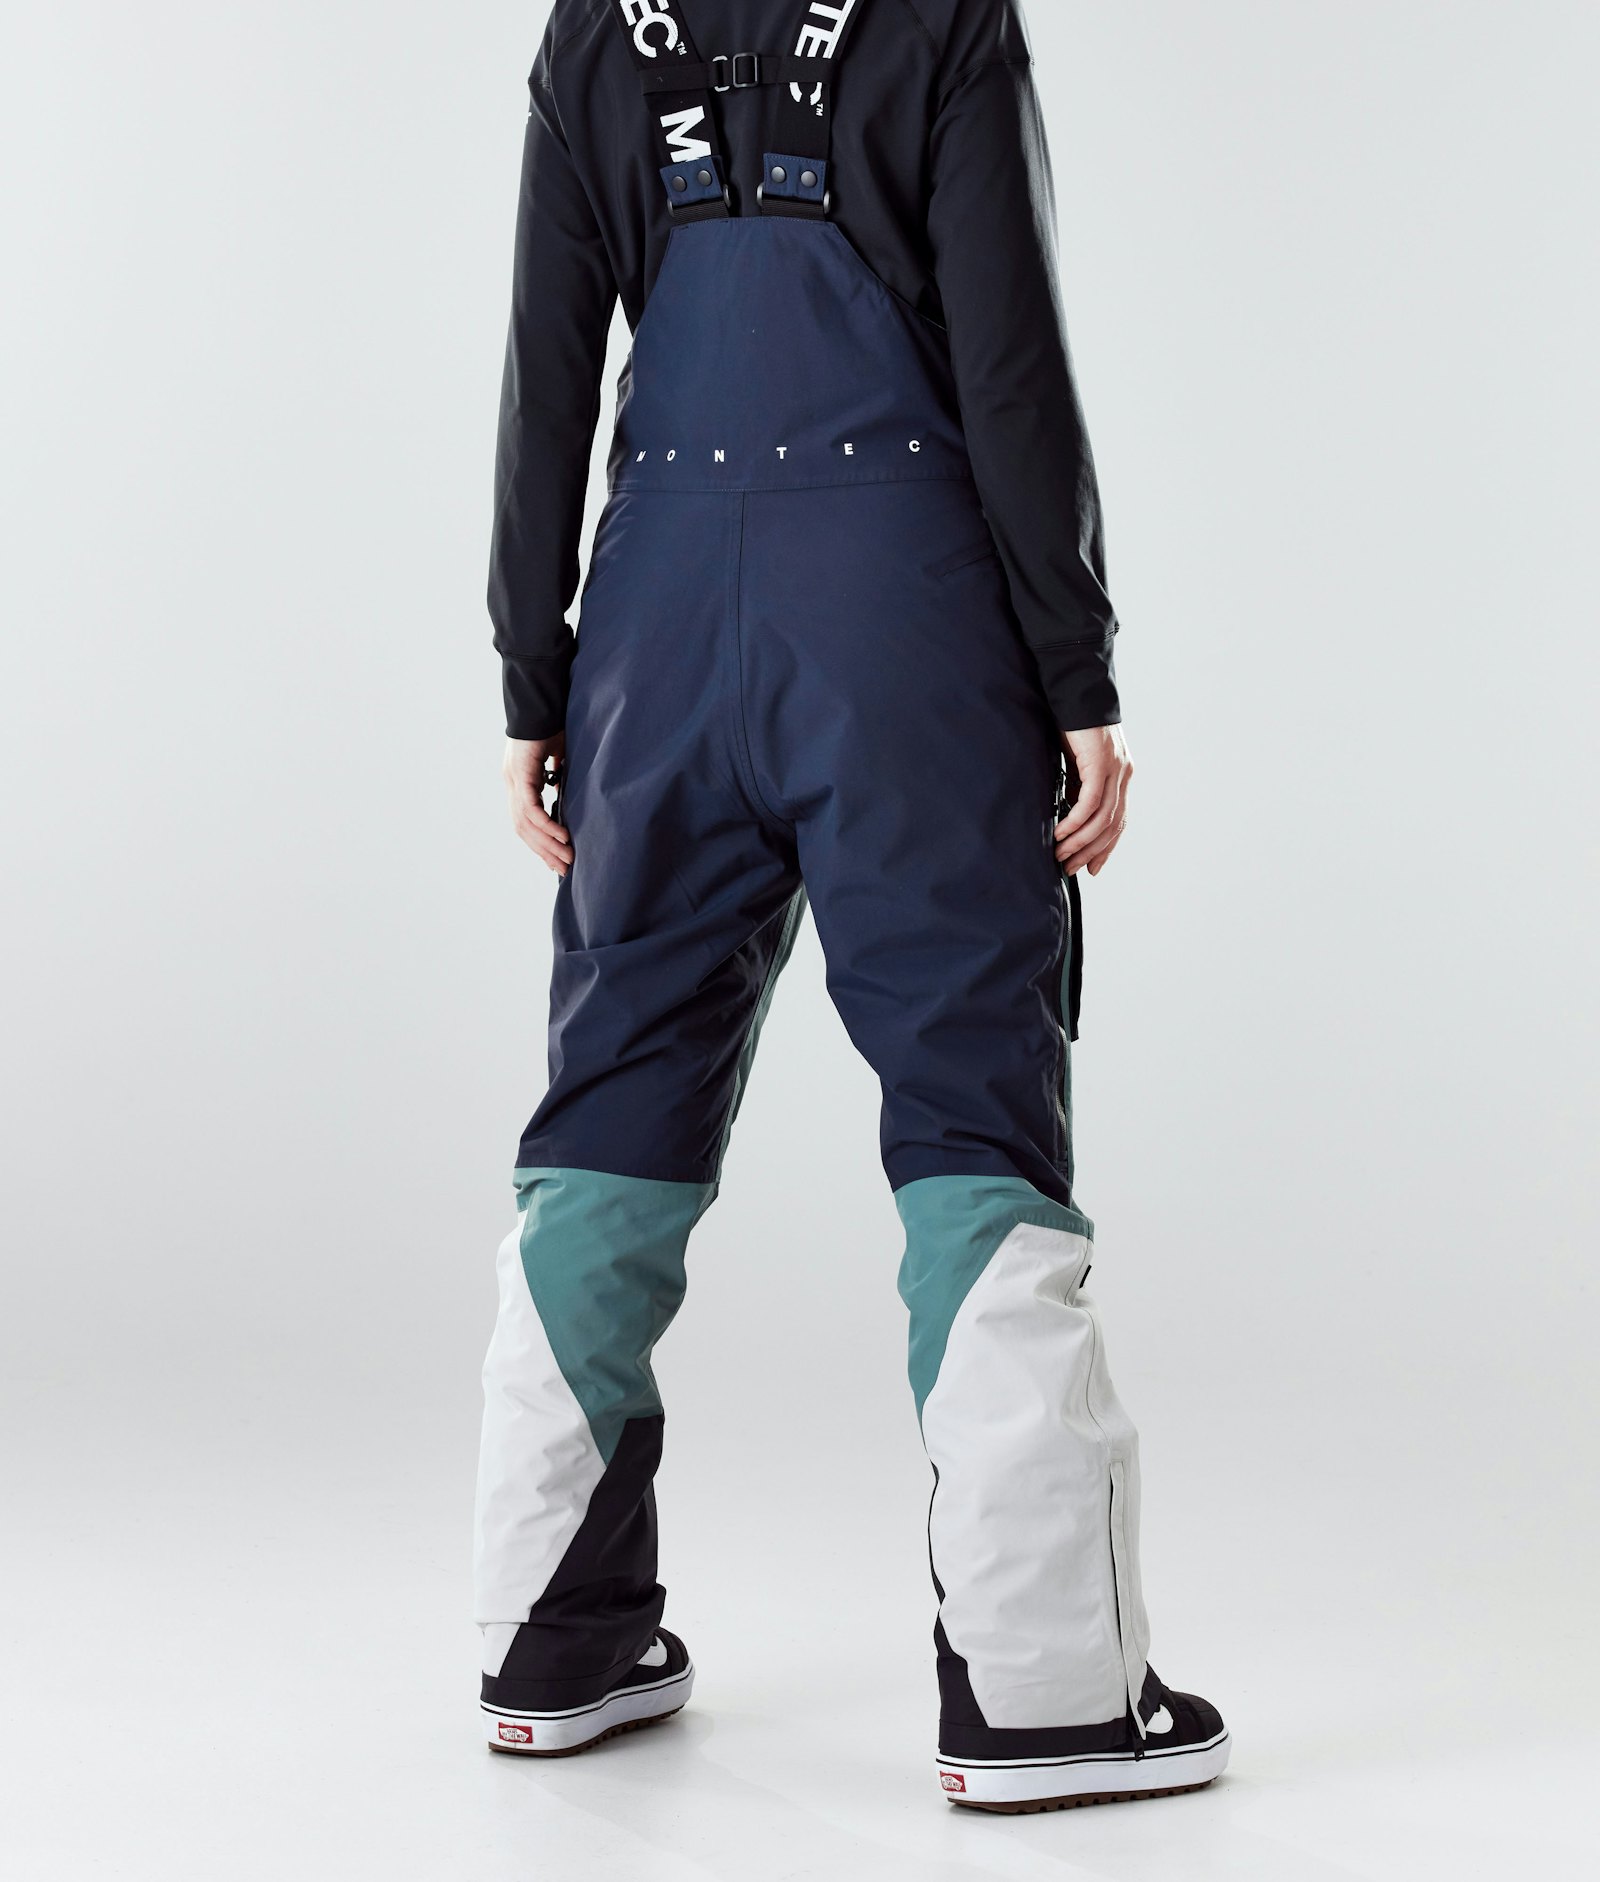 Montec Fawk W 2020 Pantalon de Snowboard Femme Marine/Atlantic/Light Grey